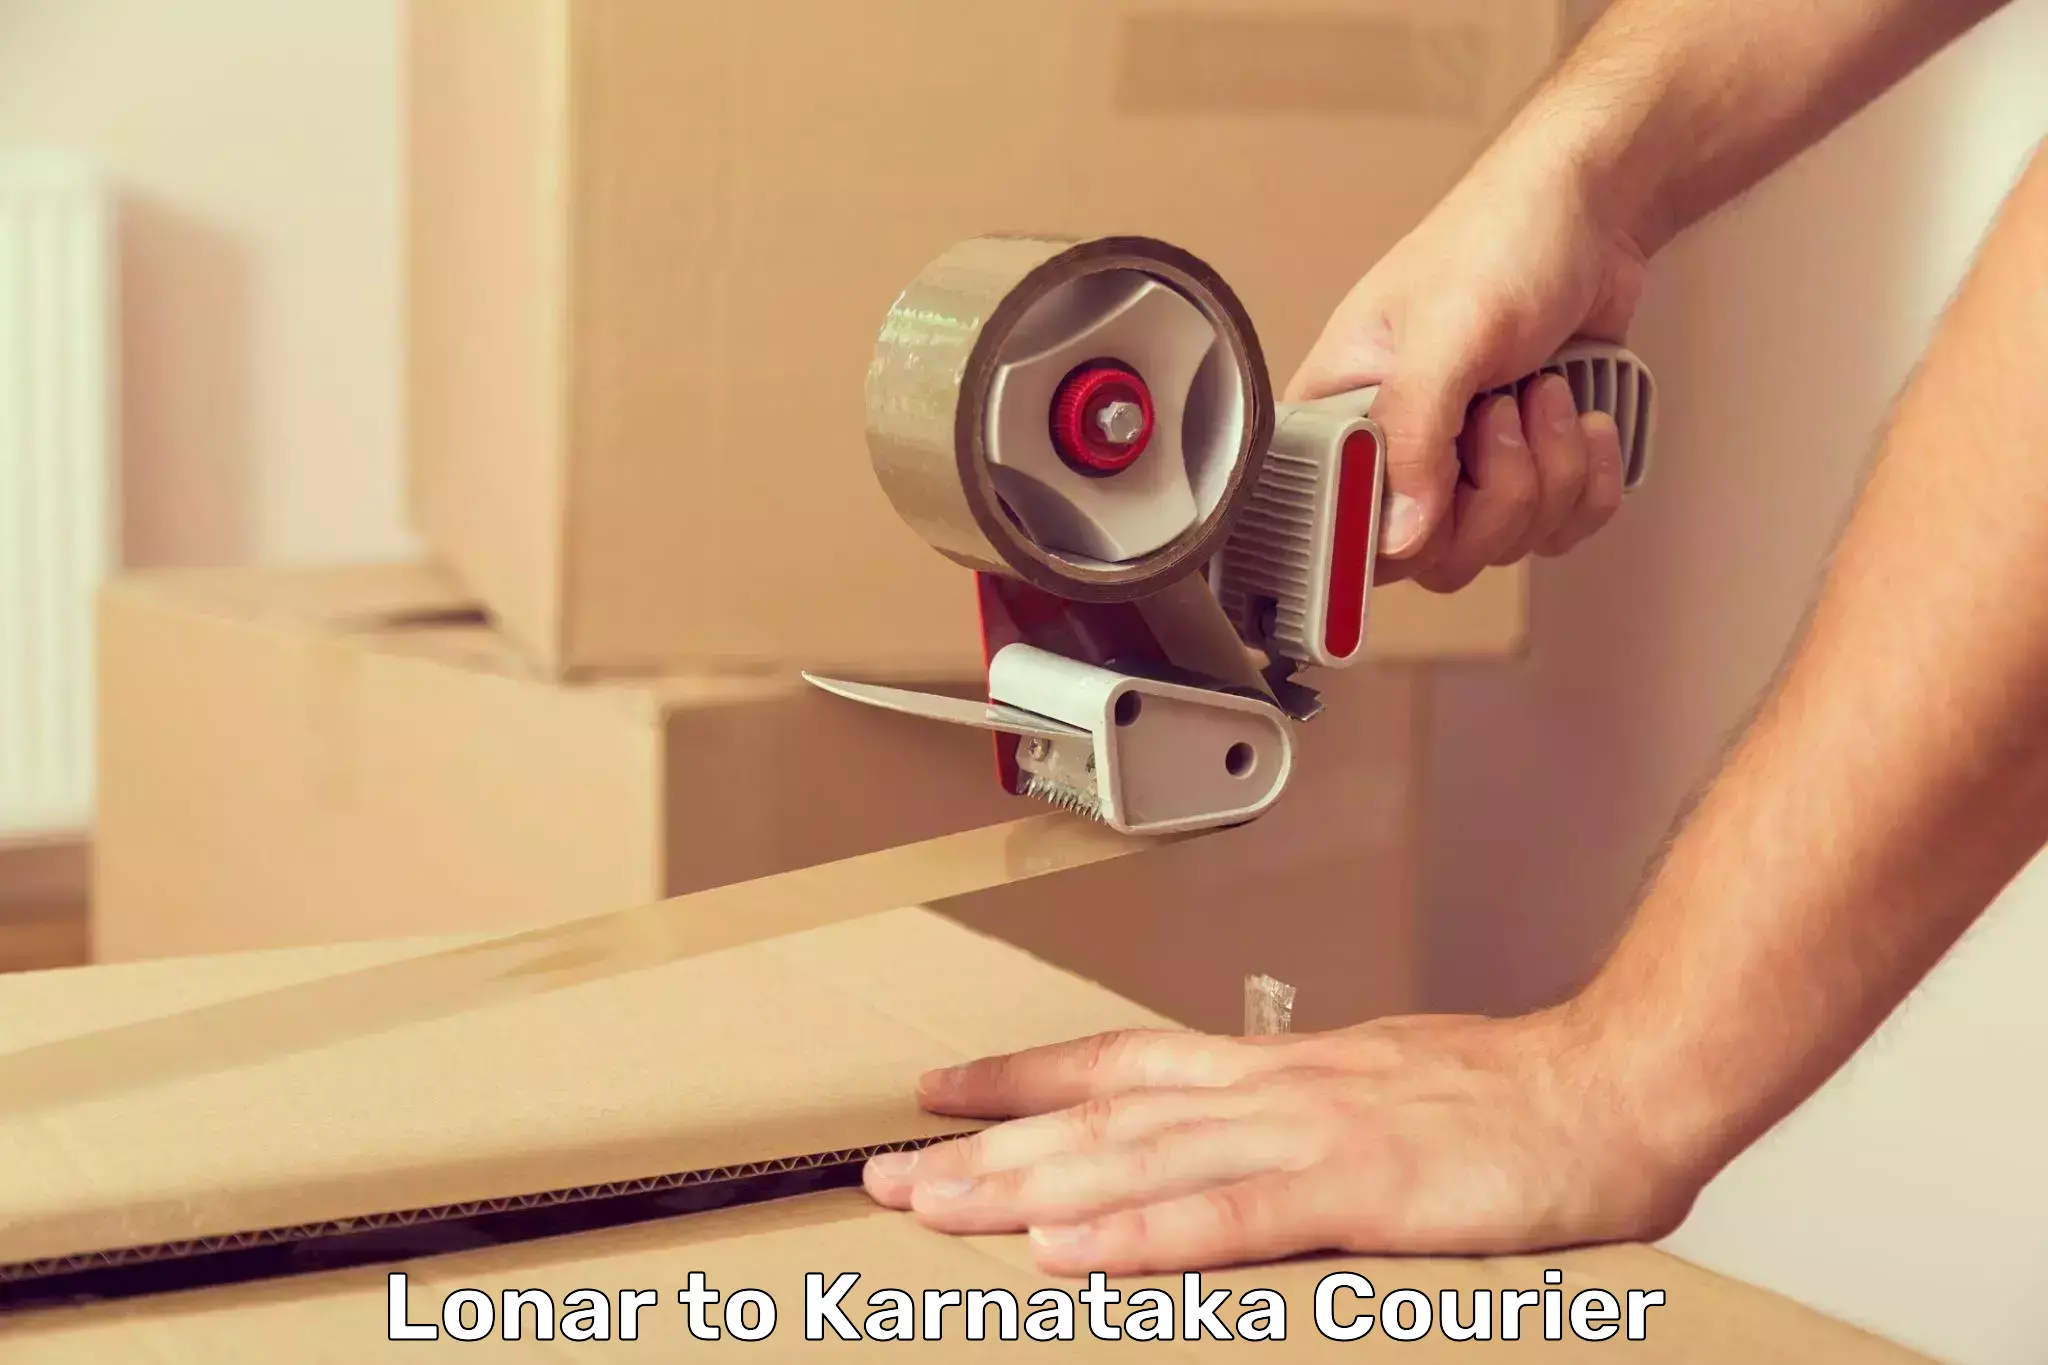 Courier service comparison Lonar to Karnataka